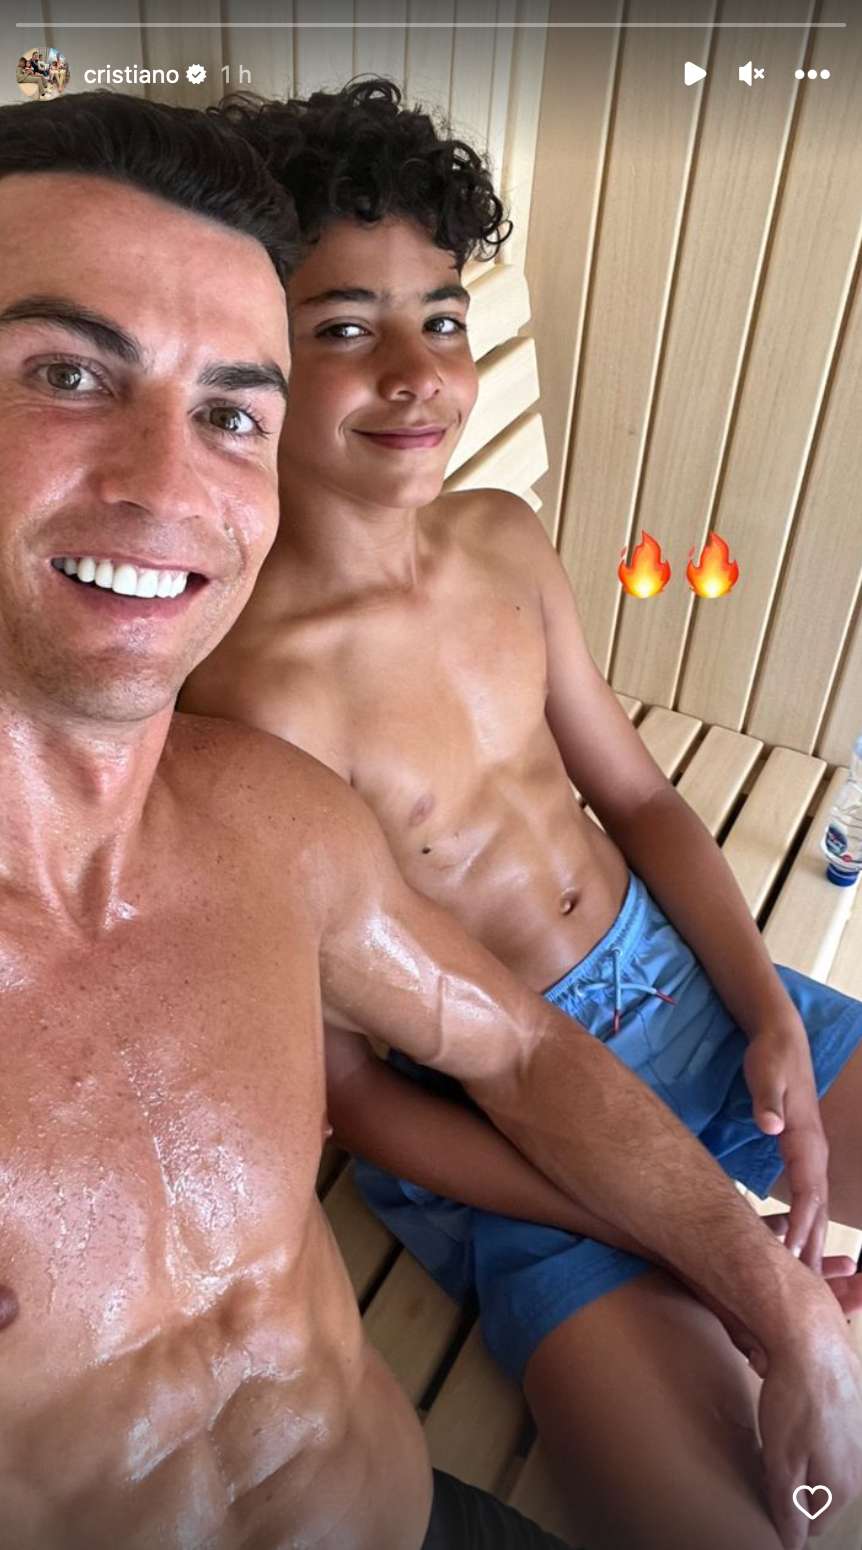 Cristiano Ronaldo Jr and Sr sauna